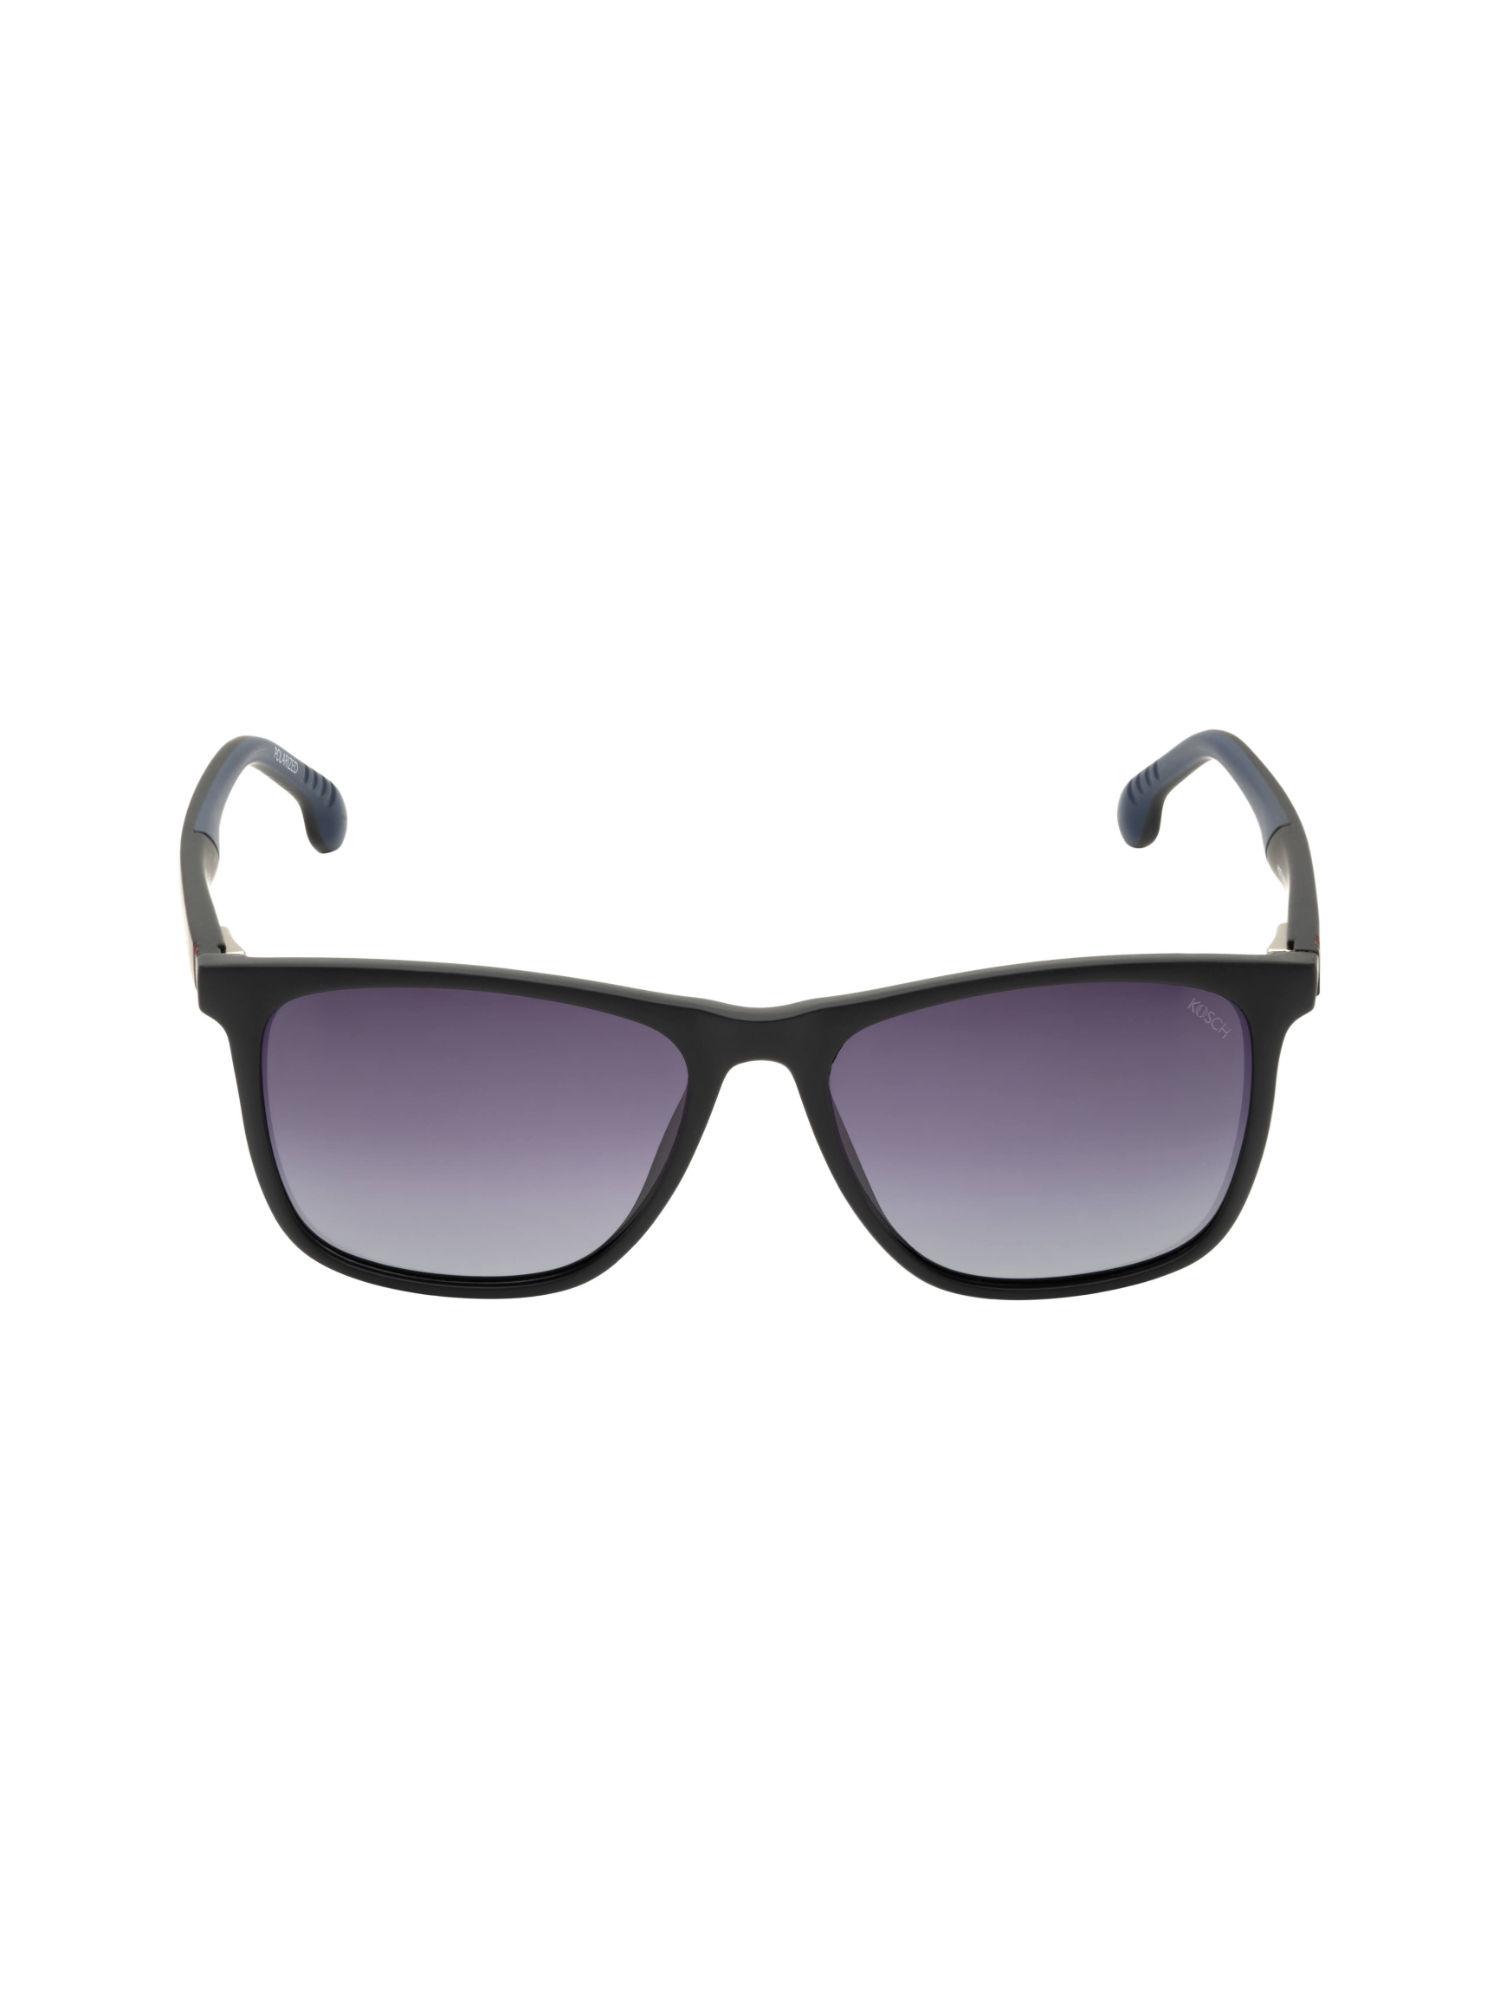 men black grey wayfarer shape sunglasses with polarised lenses